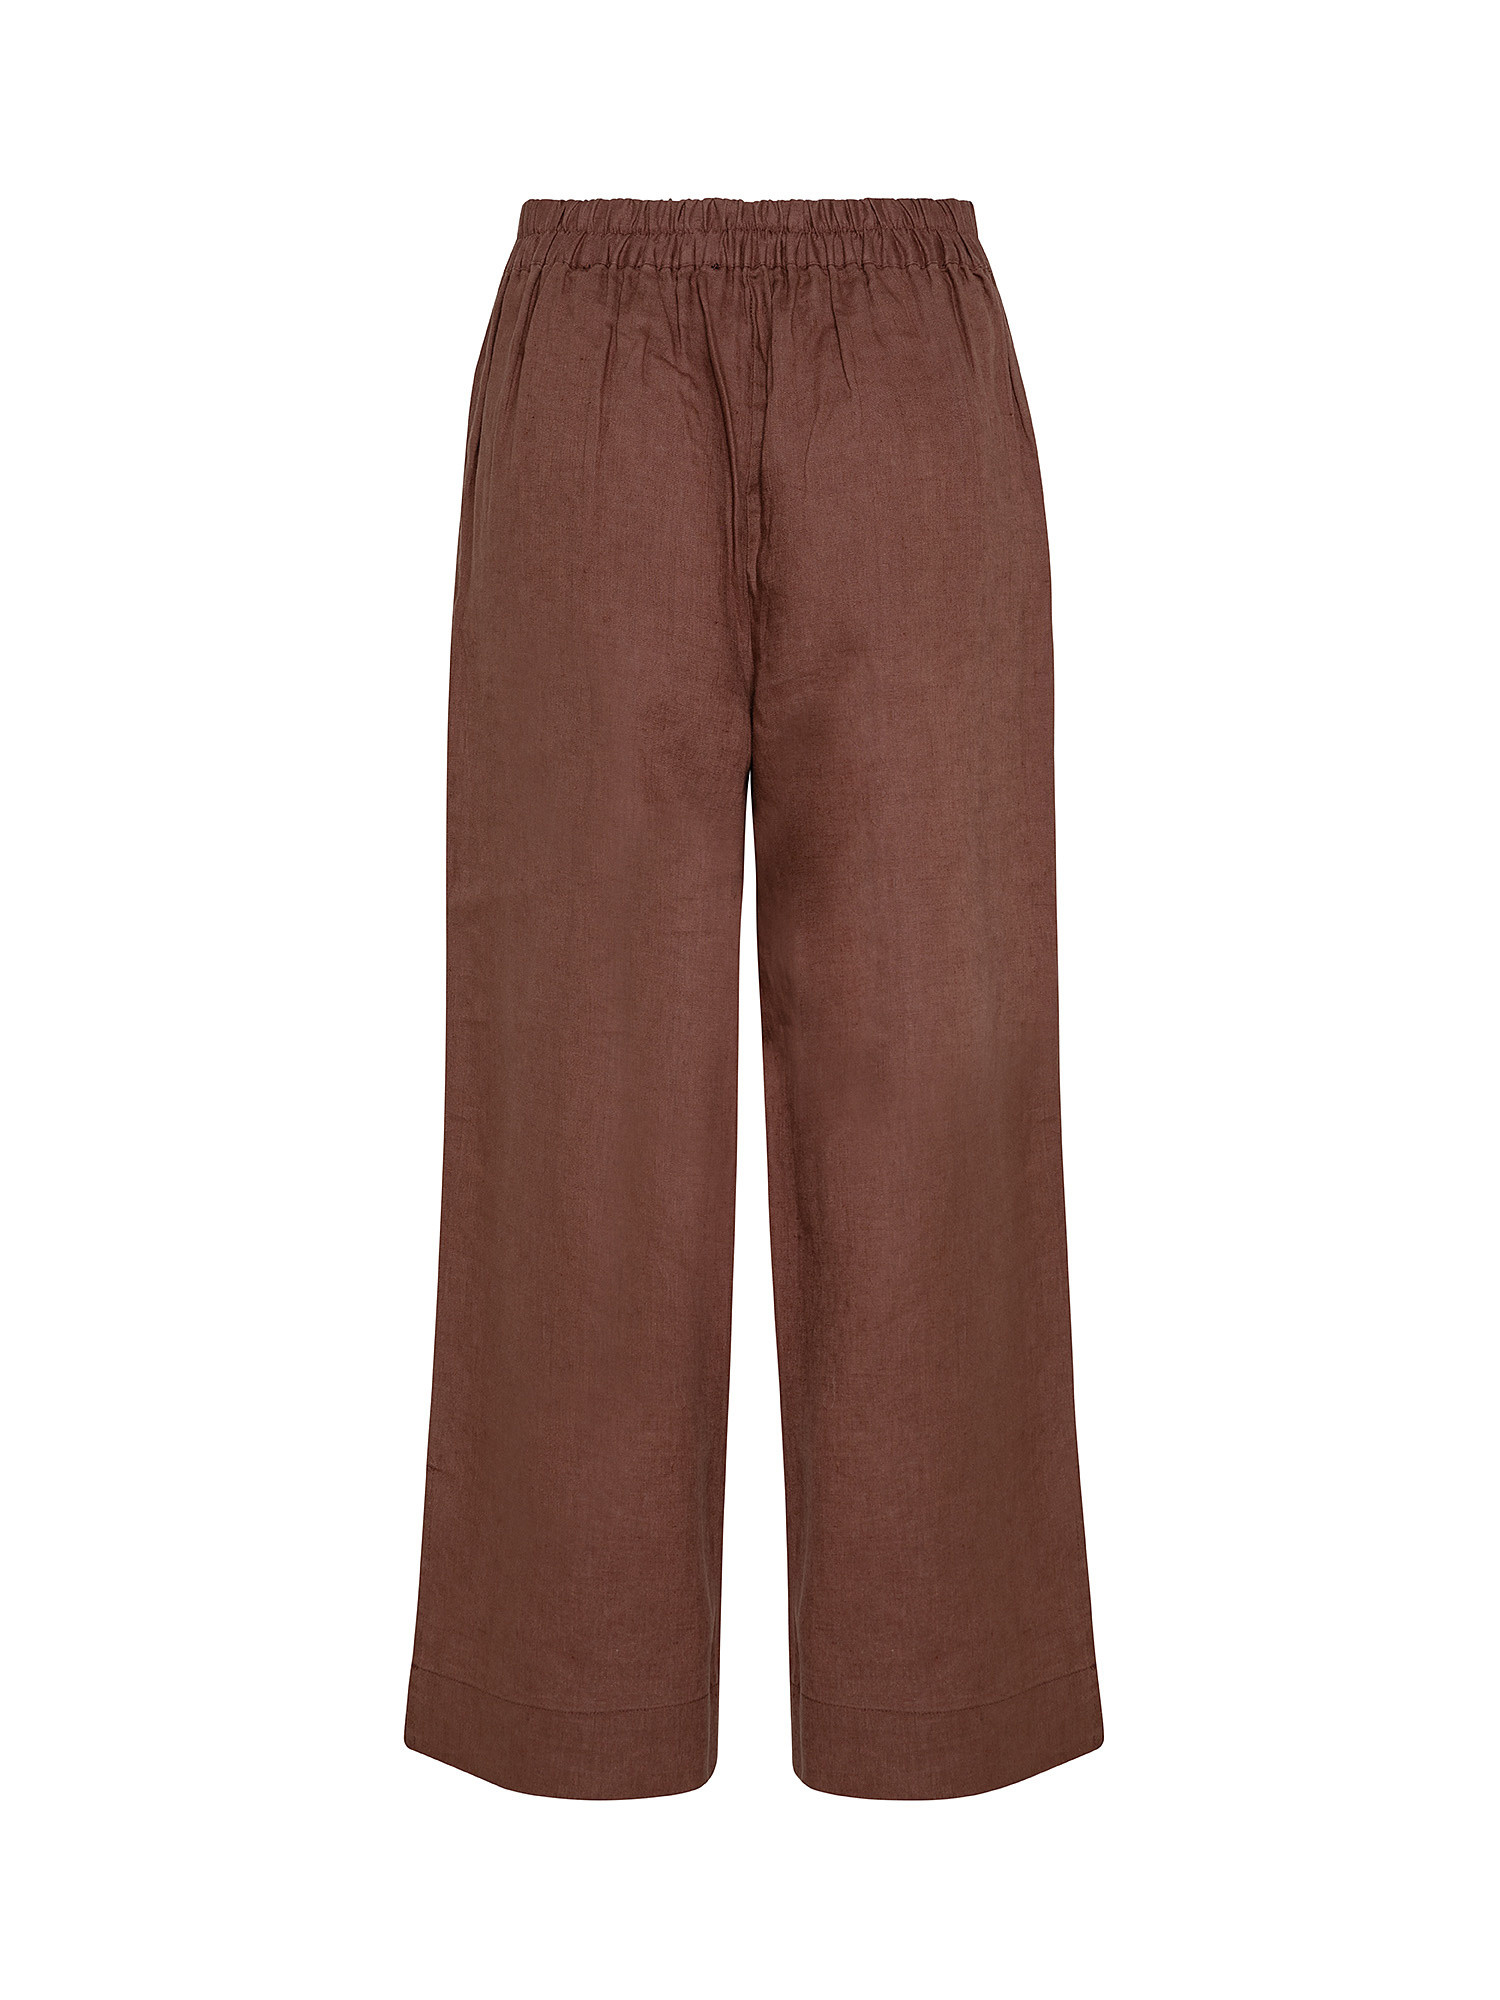 Pantaloni puro lino con spacchi, Marrone, large image number 1